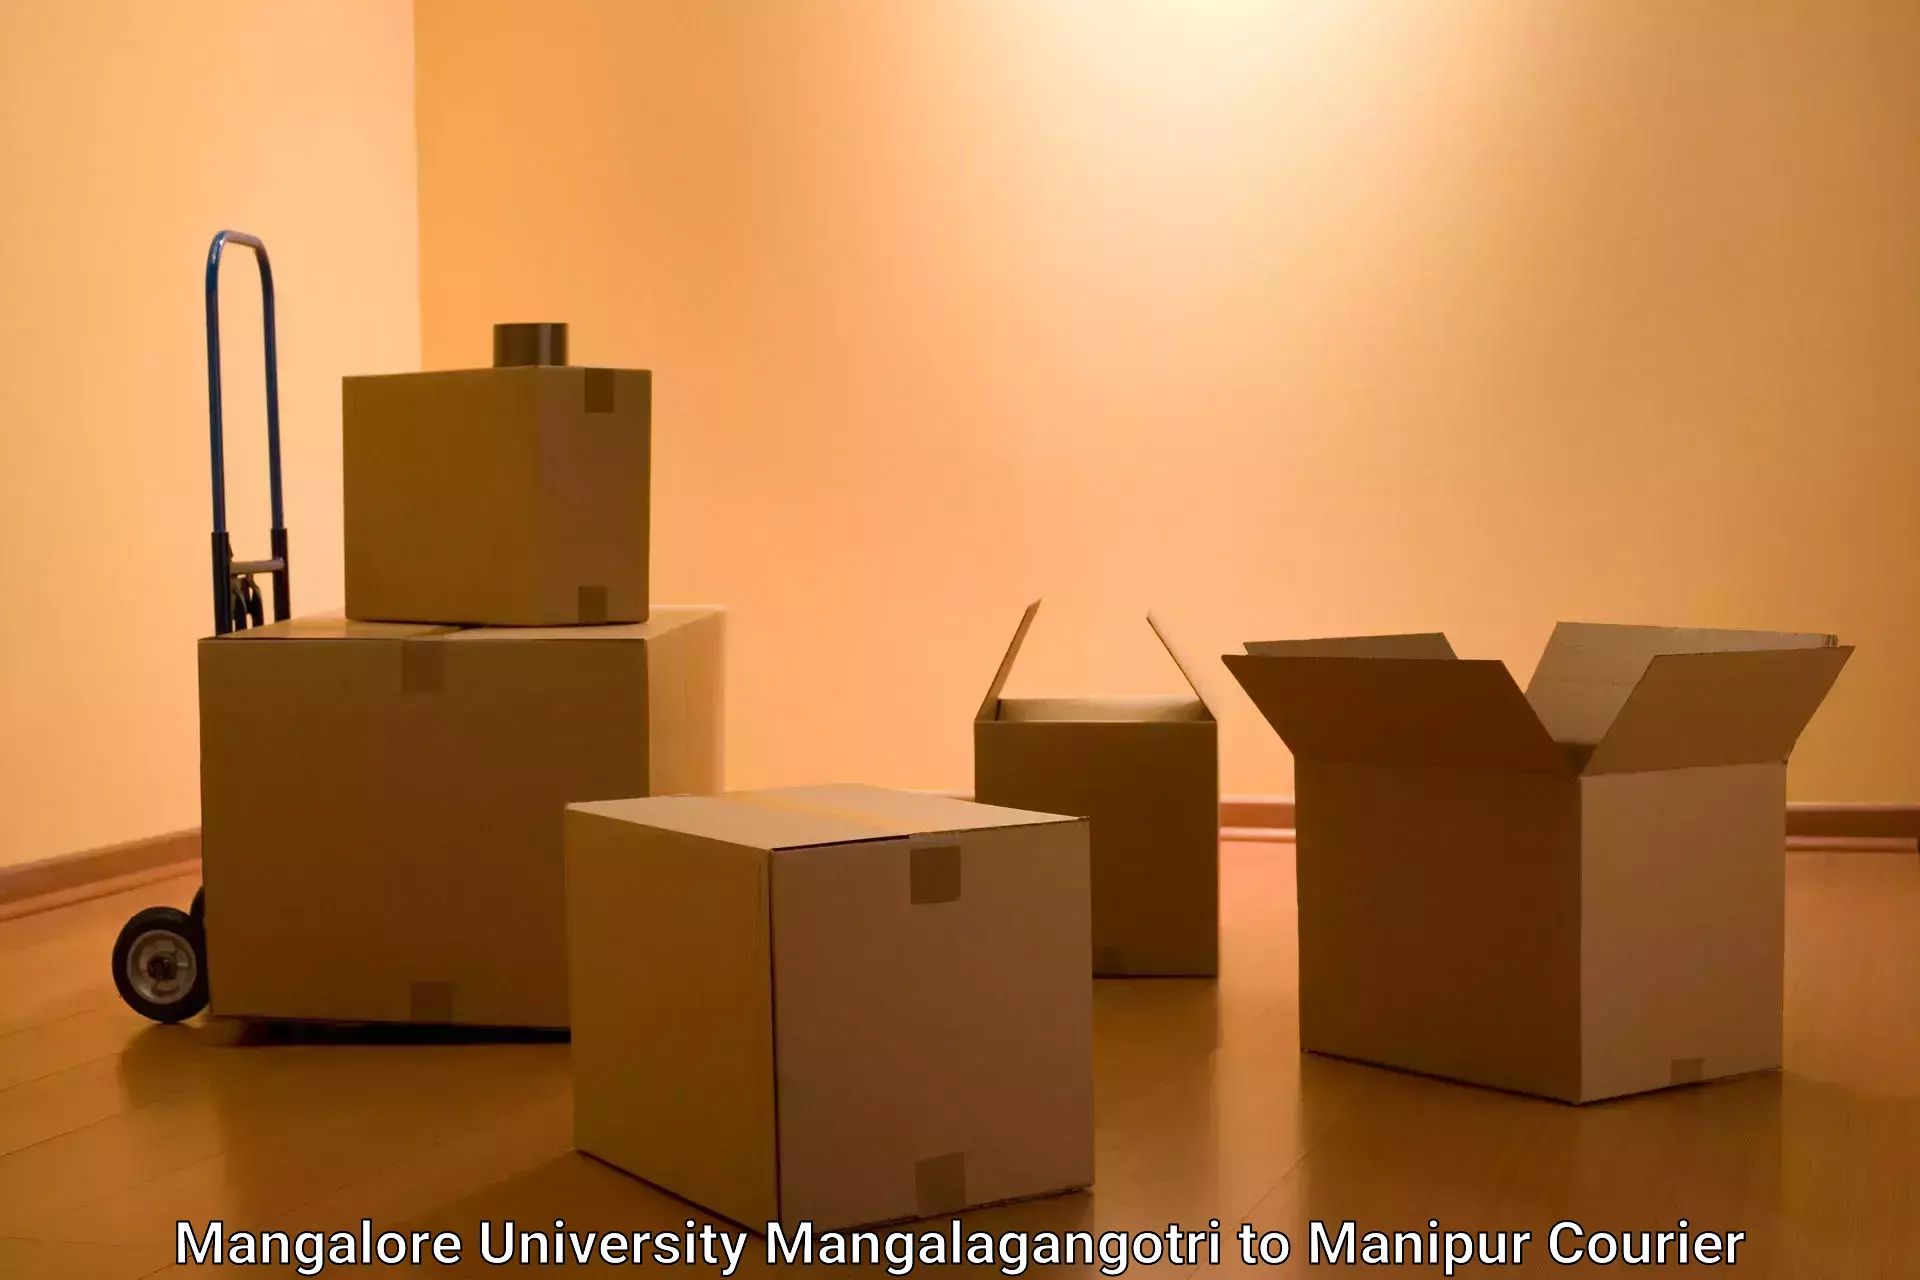 Fast delivery service Mangalore University Mangalagangotri to Manipur